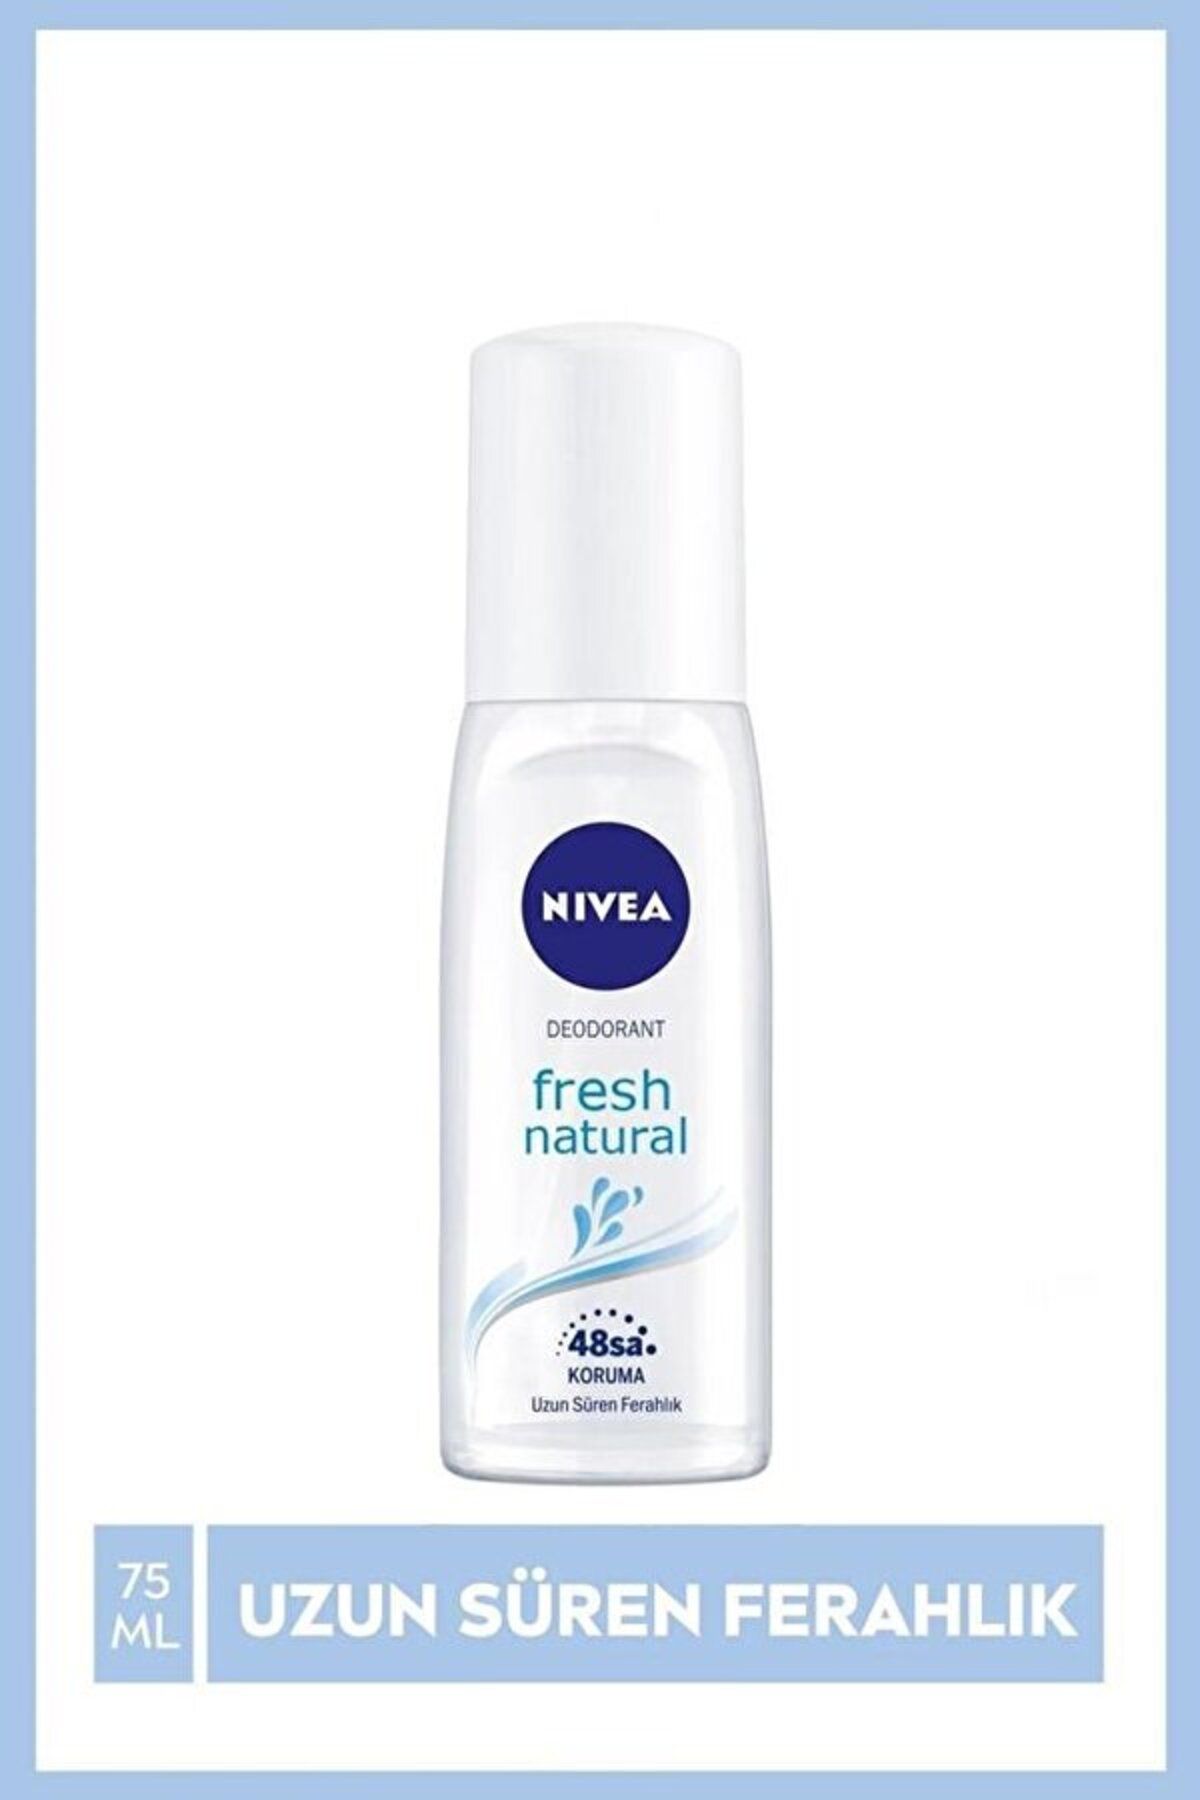 NIVEA Kadın Pump Sprey Deodorant Fresh Natural 48 Saat Deodorant Koruması 75 ml, 48 Saat Koruma